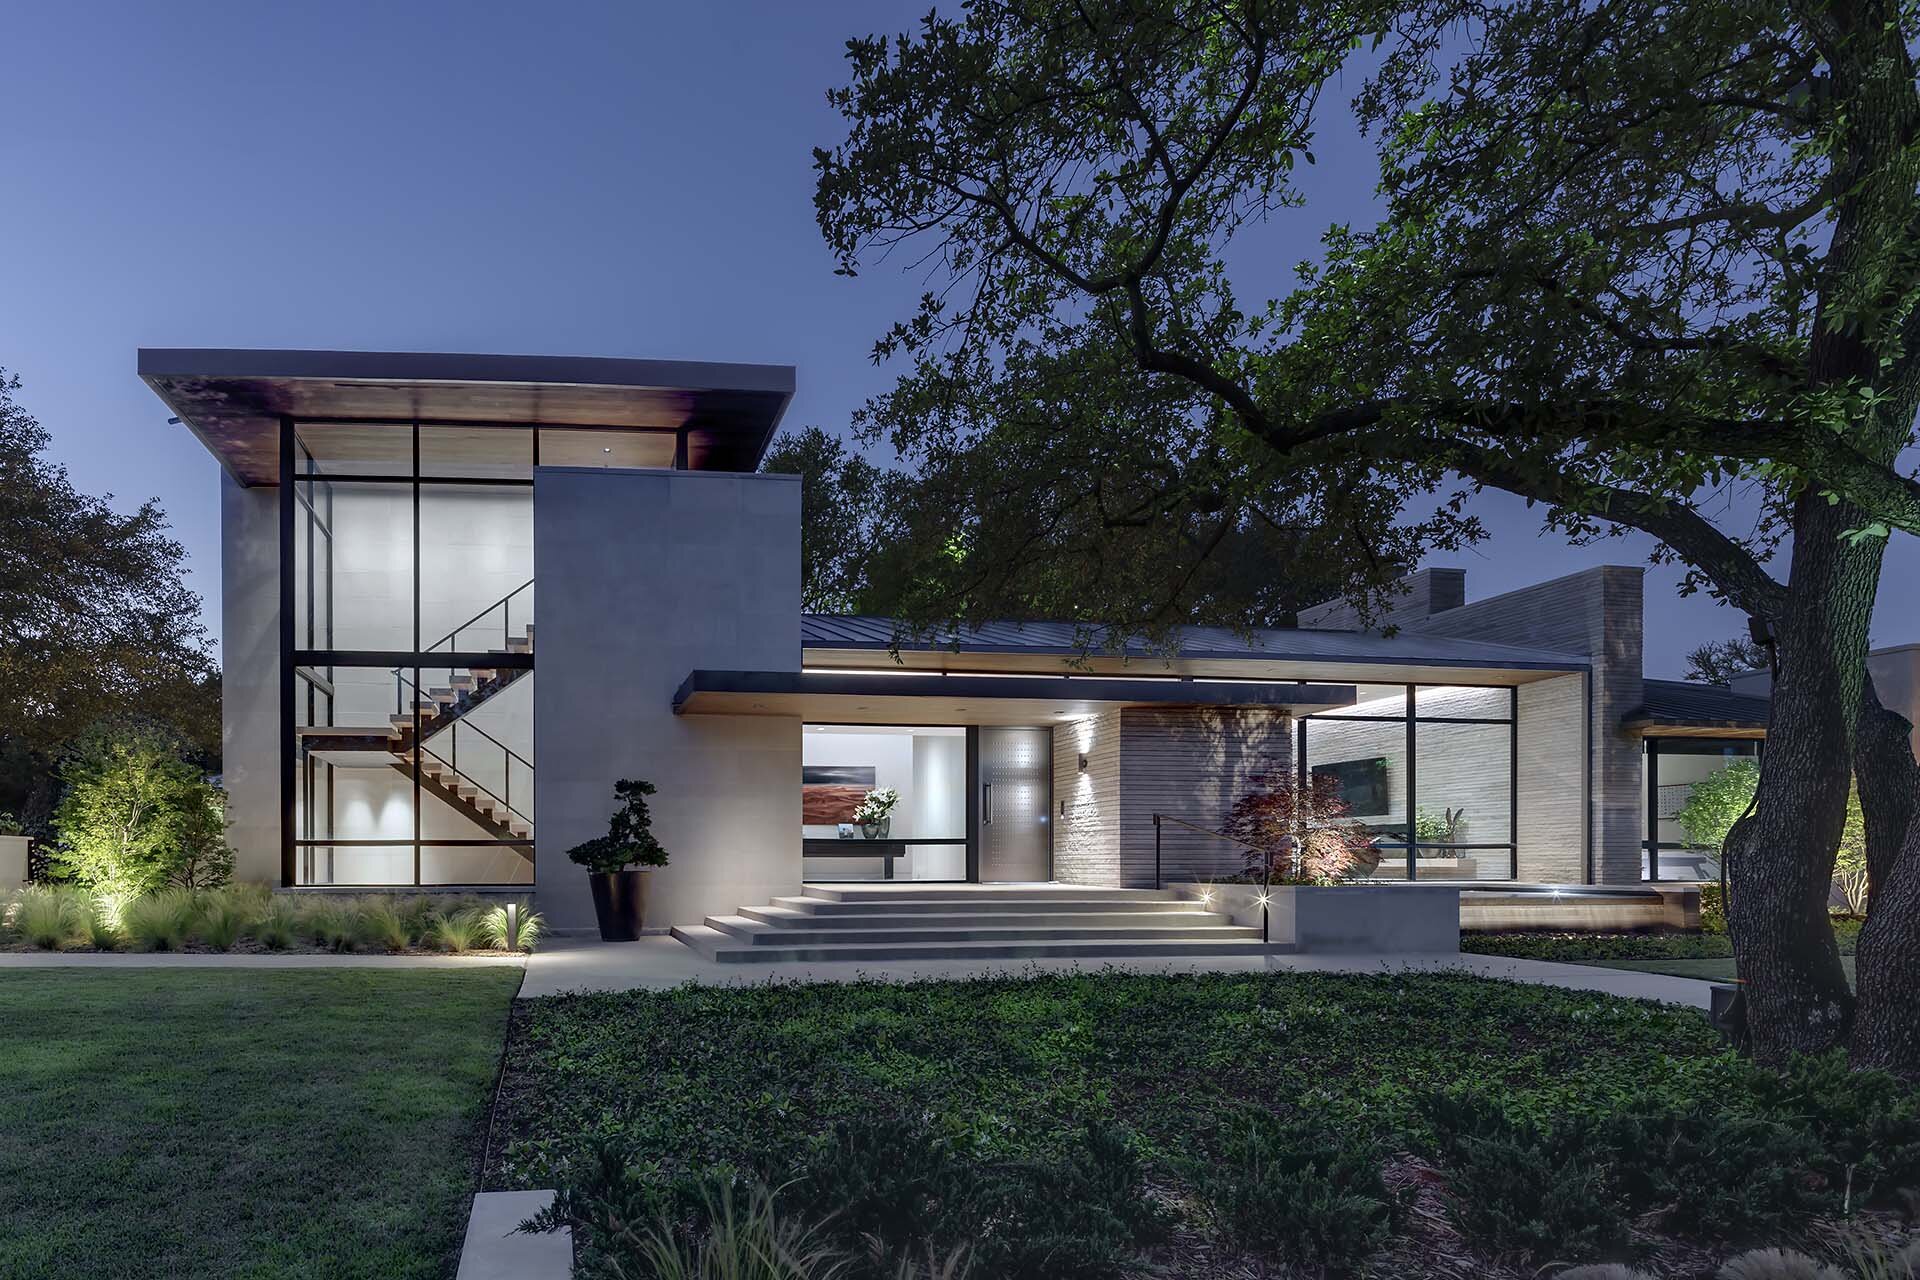  Modern comfortable contemporary home in Preston Hollow Dallas Texas designed by Bernbaum/Magadini Architects 